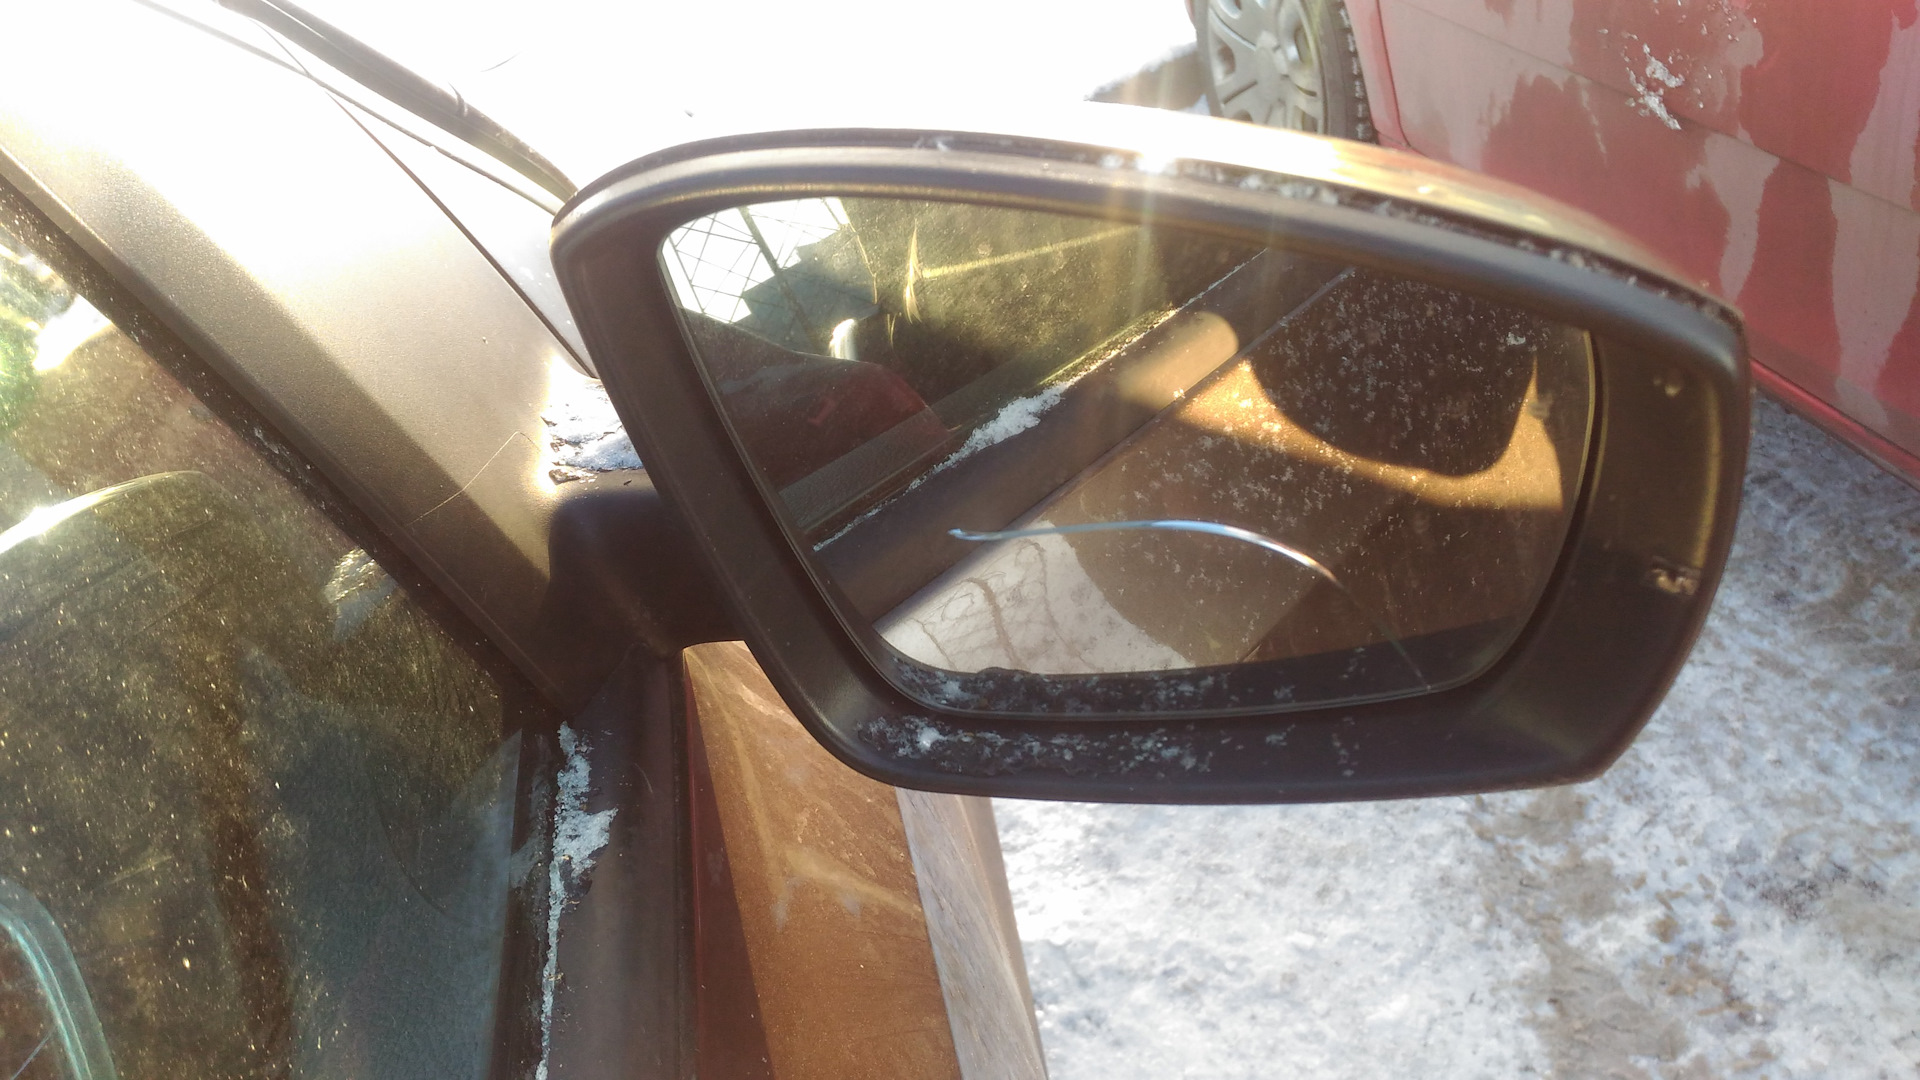 Volkswagen polo зеркала. Polo sedan зеркало правое. Фольксваген поло седан зеркало правое. Зеркальный элемент бокового зеркала для поло седана.